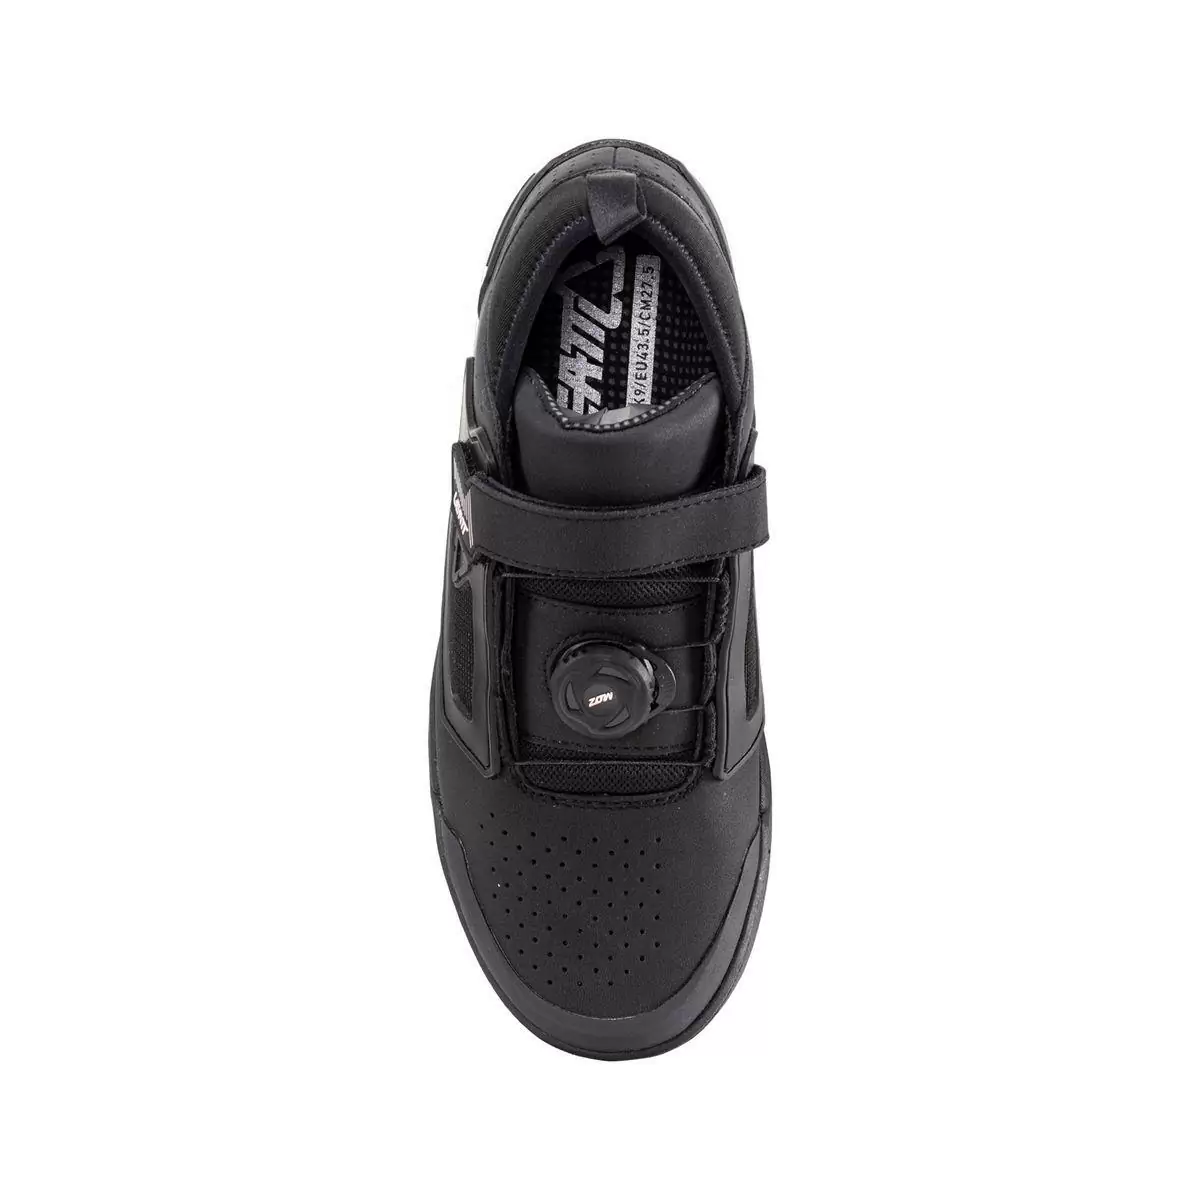 Pro Flat 3.0 MTB Shoes Black Size 48.5 #3